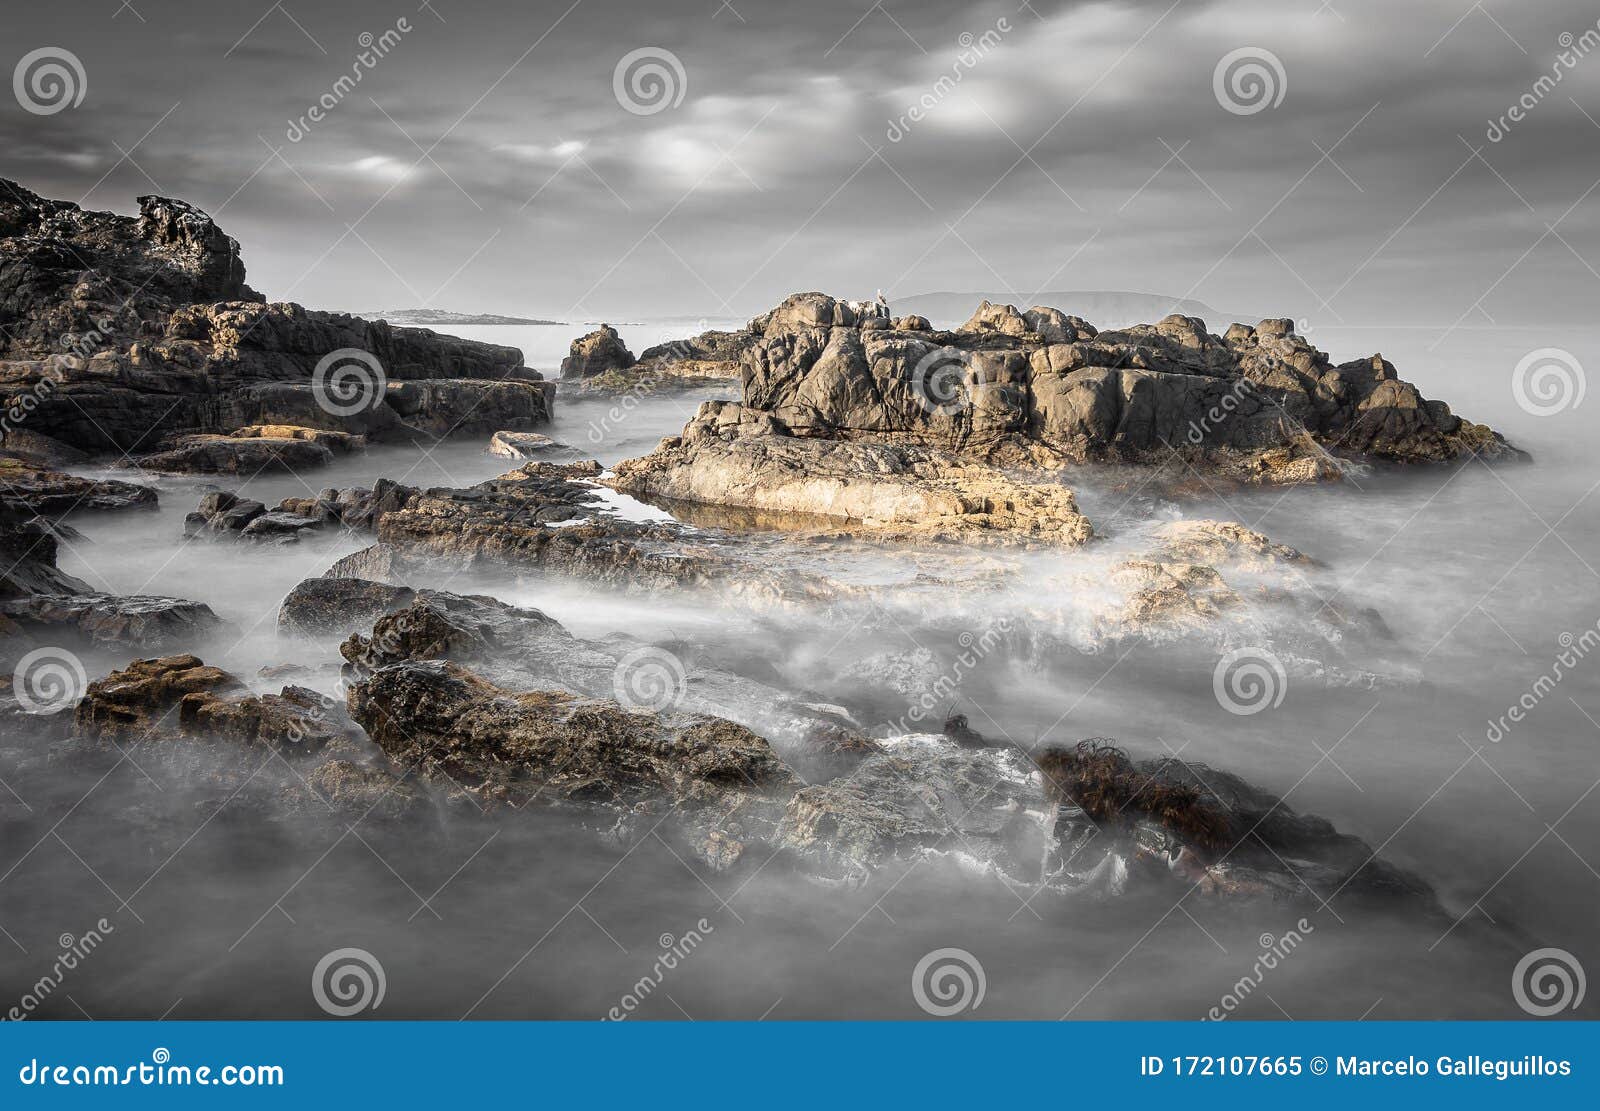 coastal haze on the rocks of the coastal edge of atacama